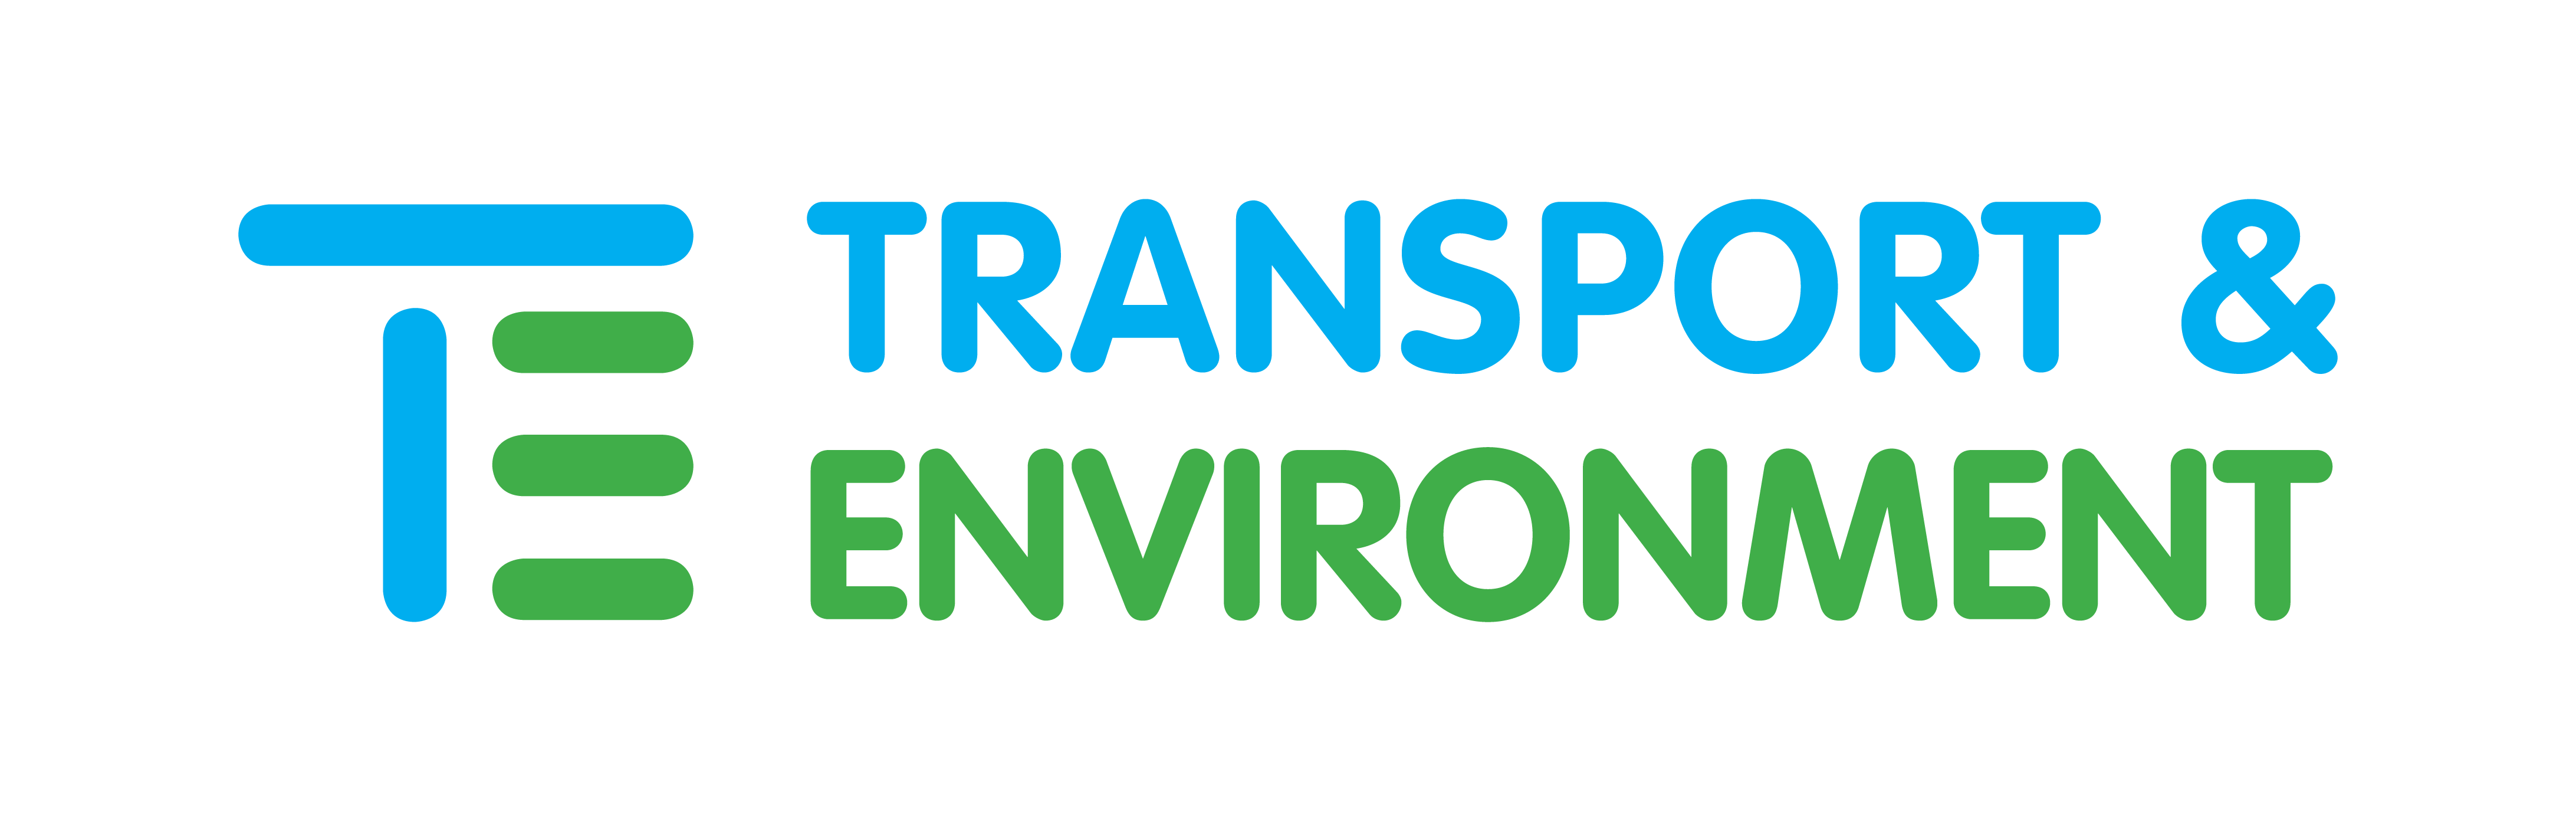 Transport & Environment